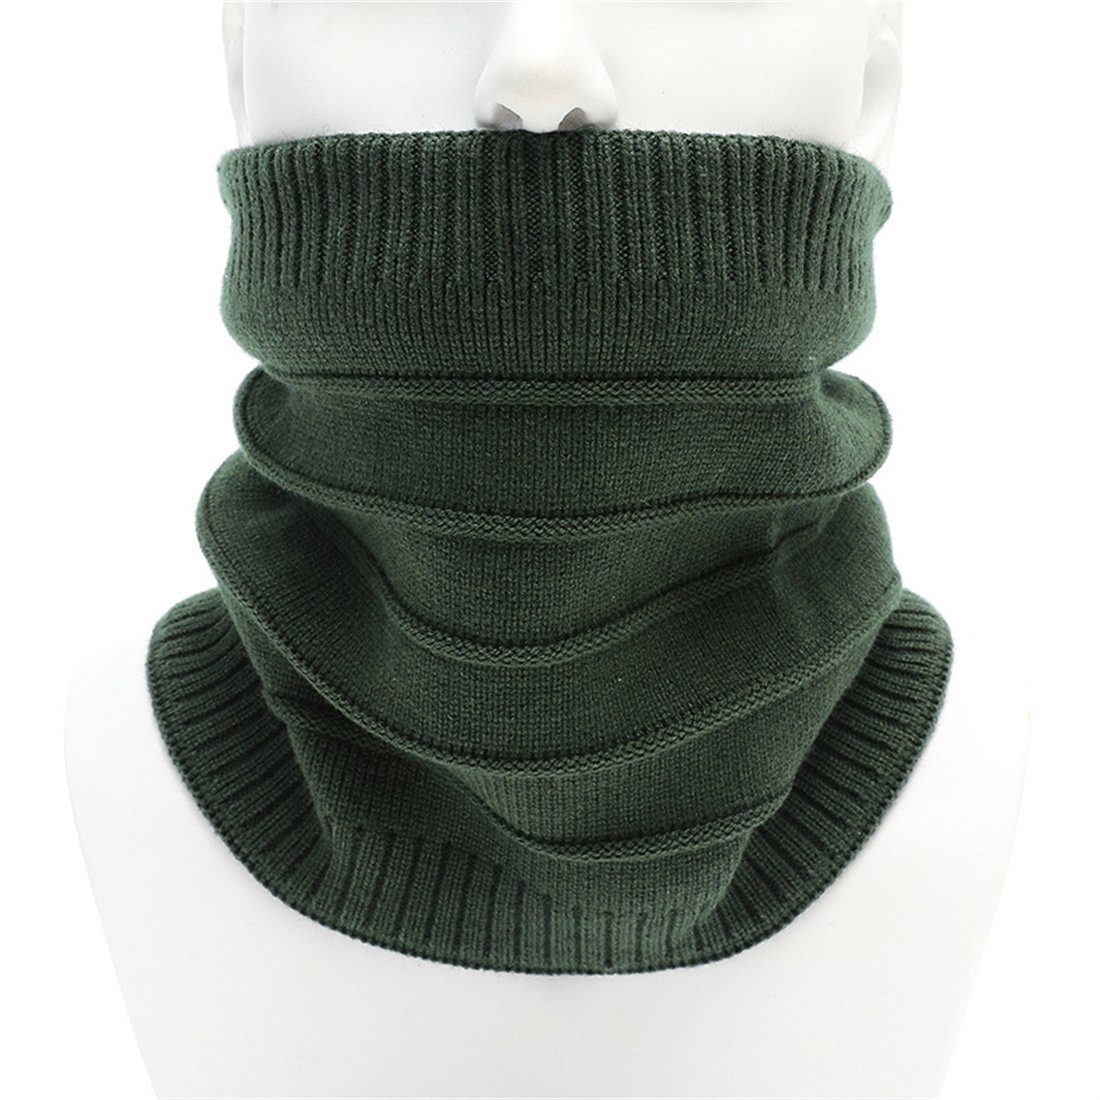 Unisex warmer Halsbedeckung grün DÖRÖY gestrickte Modeschal gestreifter Schal, einfarbiger